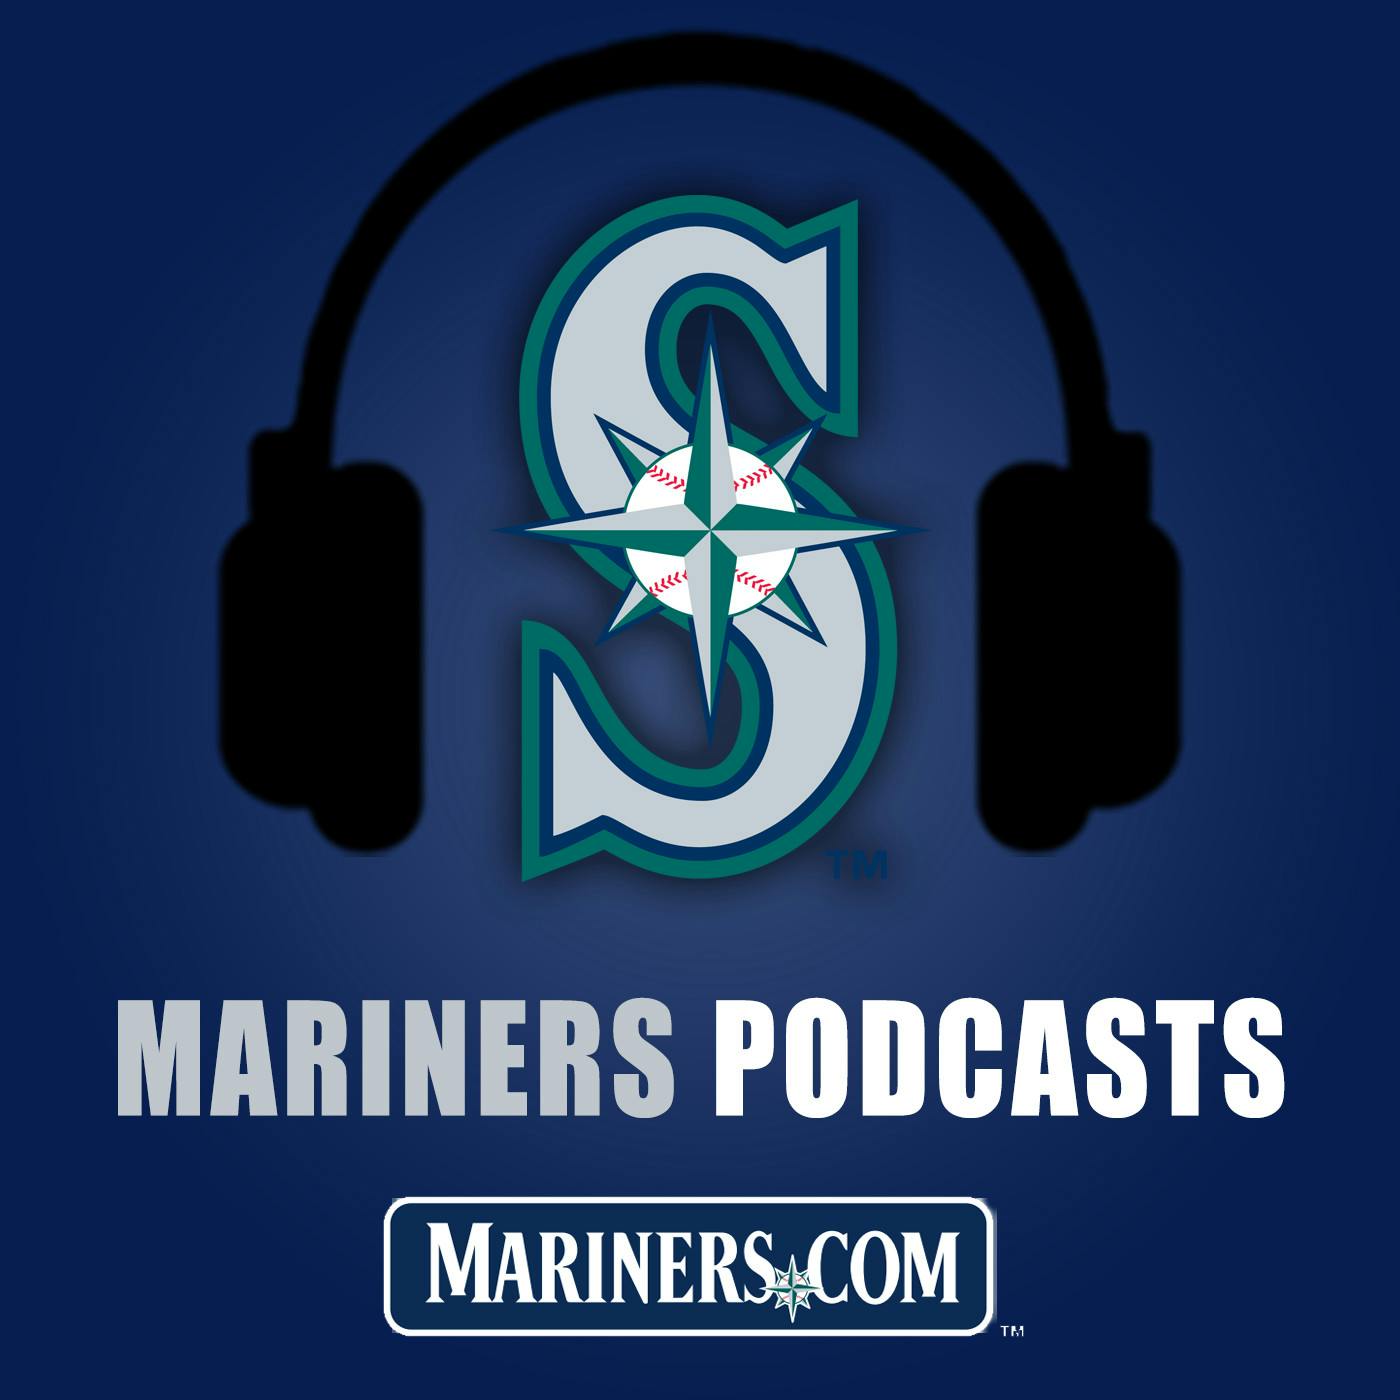 11/18/16: MLB.com Extras | HOF Candidate Edgar Martinez